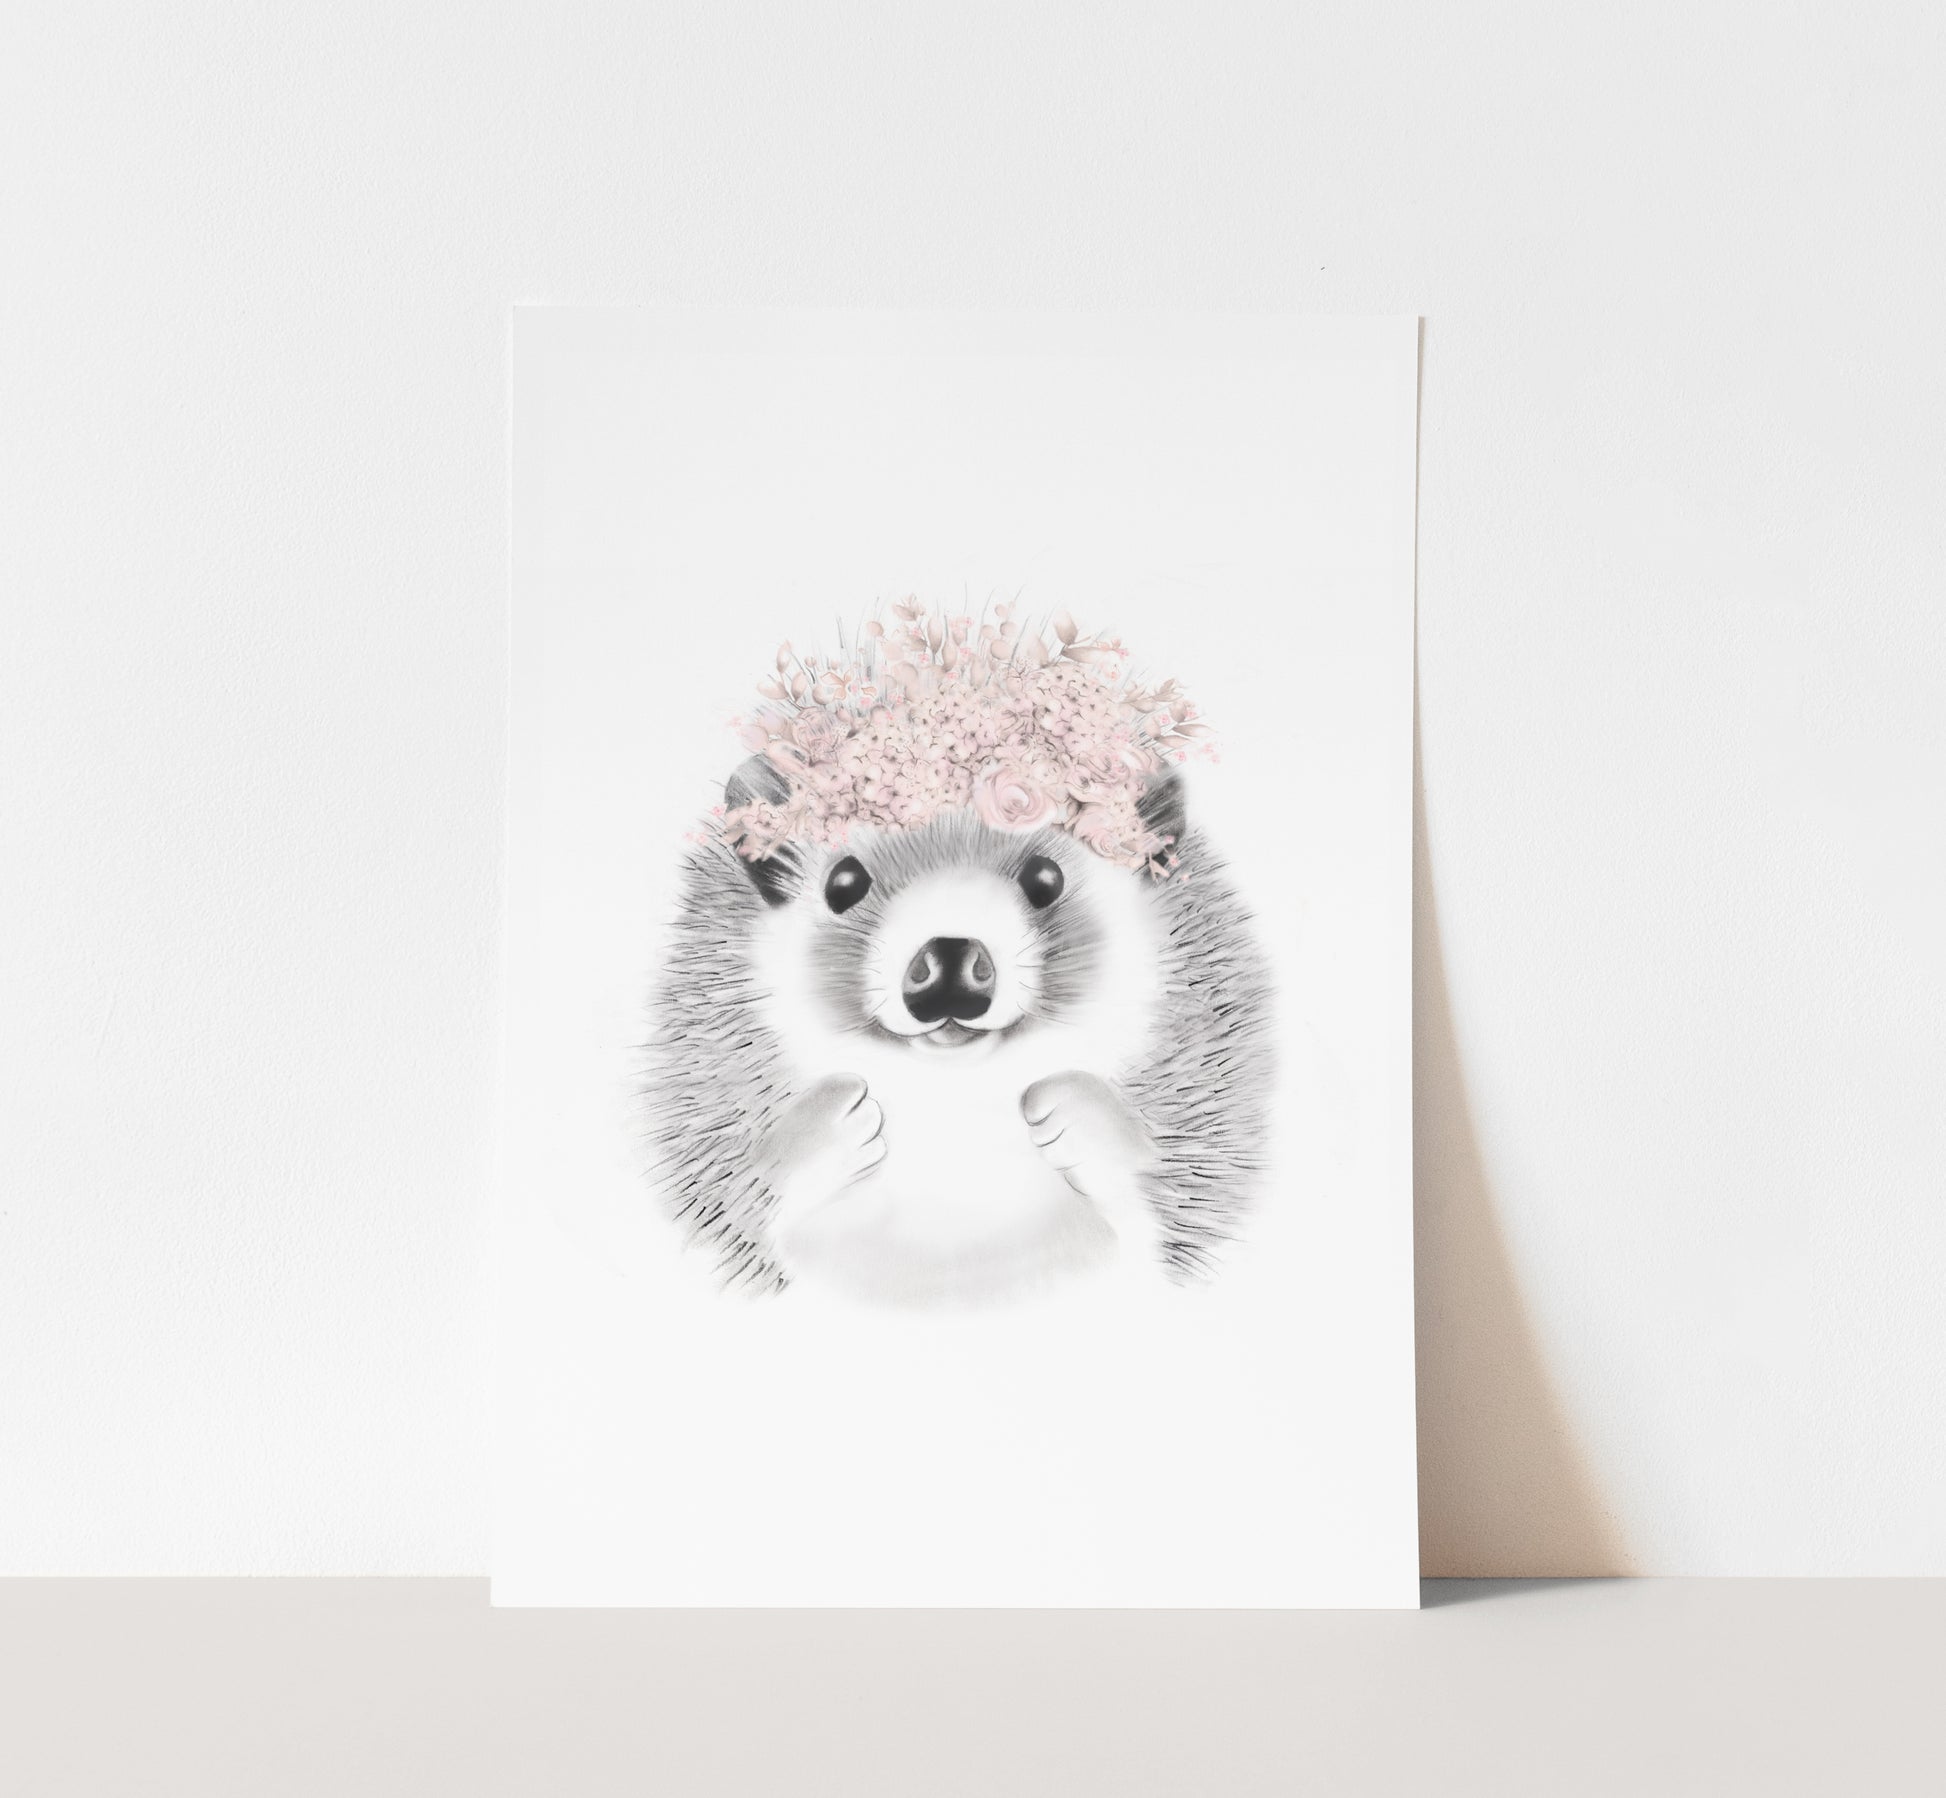 Hedgehog with Blush Flower Crown Print - Studio Q - Art by Nicky Quartermaine Scott